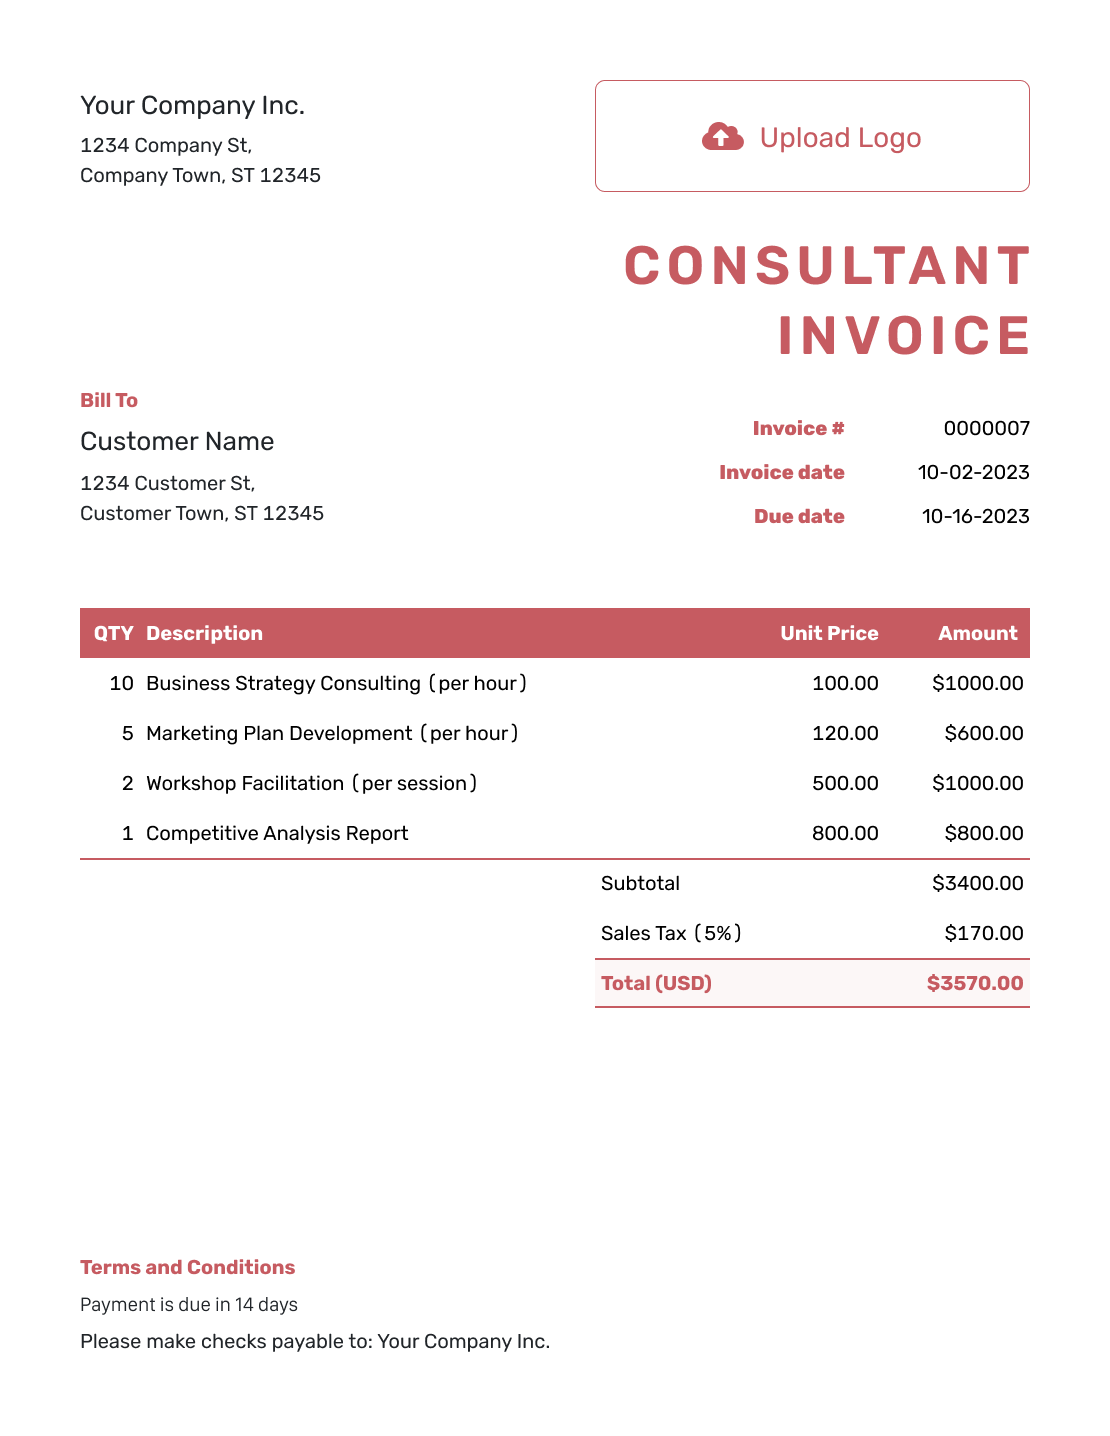 Itemized Consultant Invoice Template